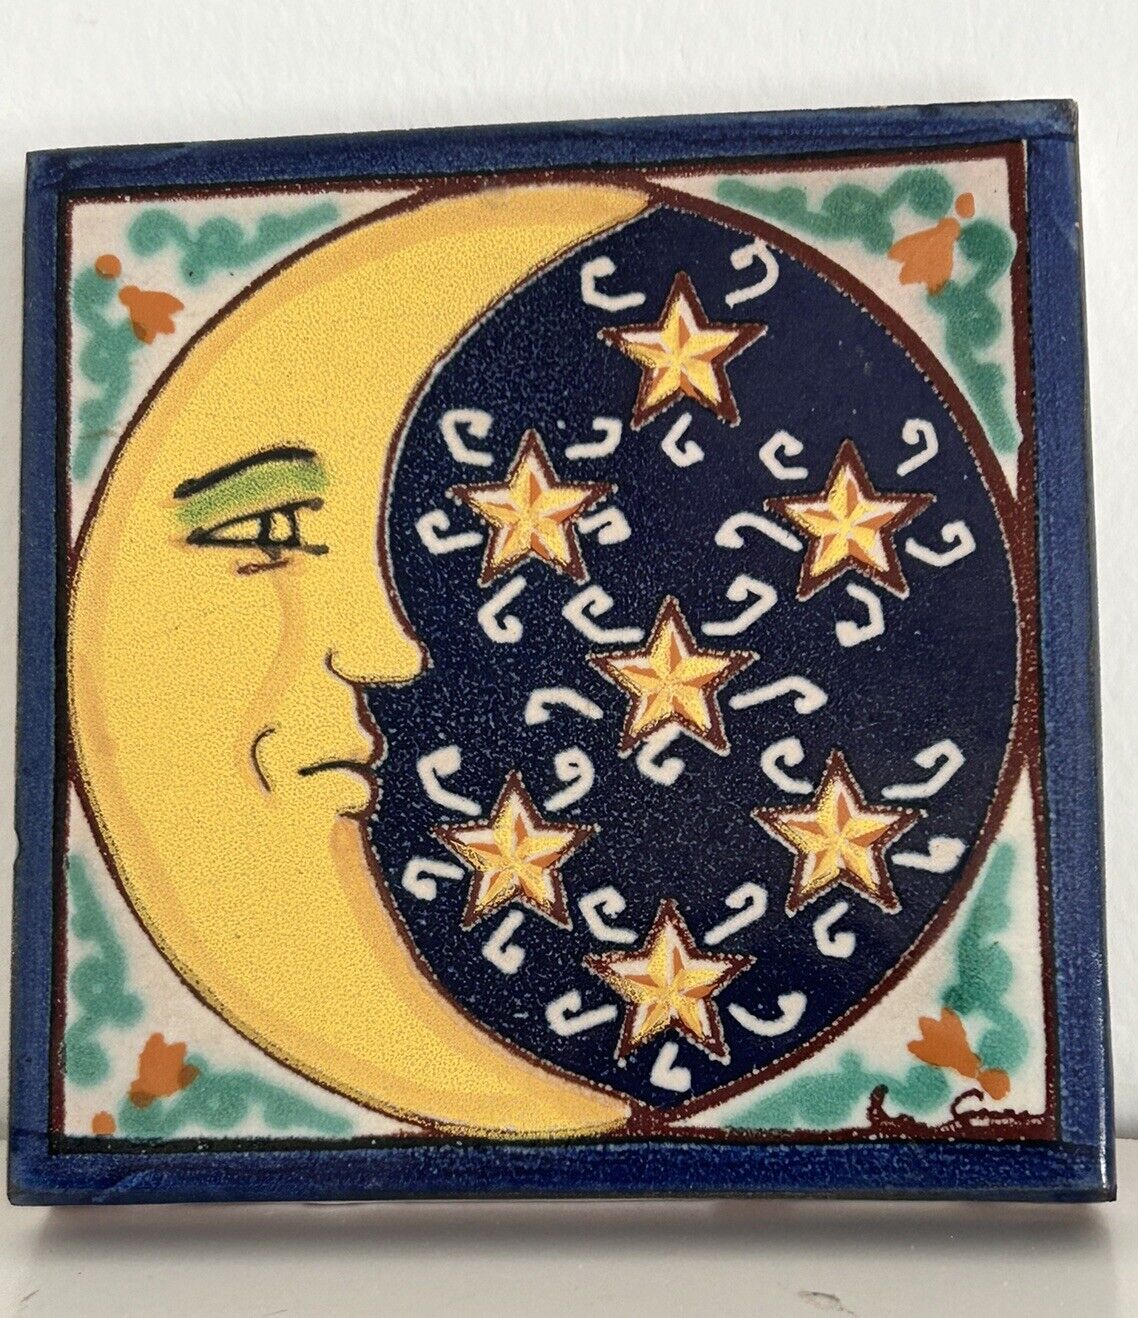 Wall Tile Moon  Stars Artist Signed La Giara in Santo Stefano di Camastra Sicily